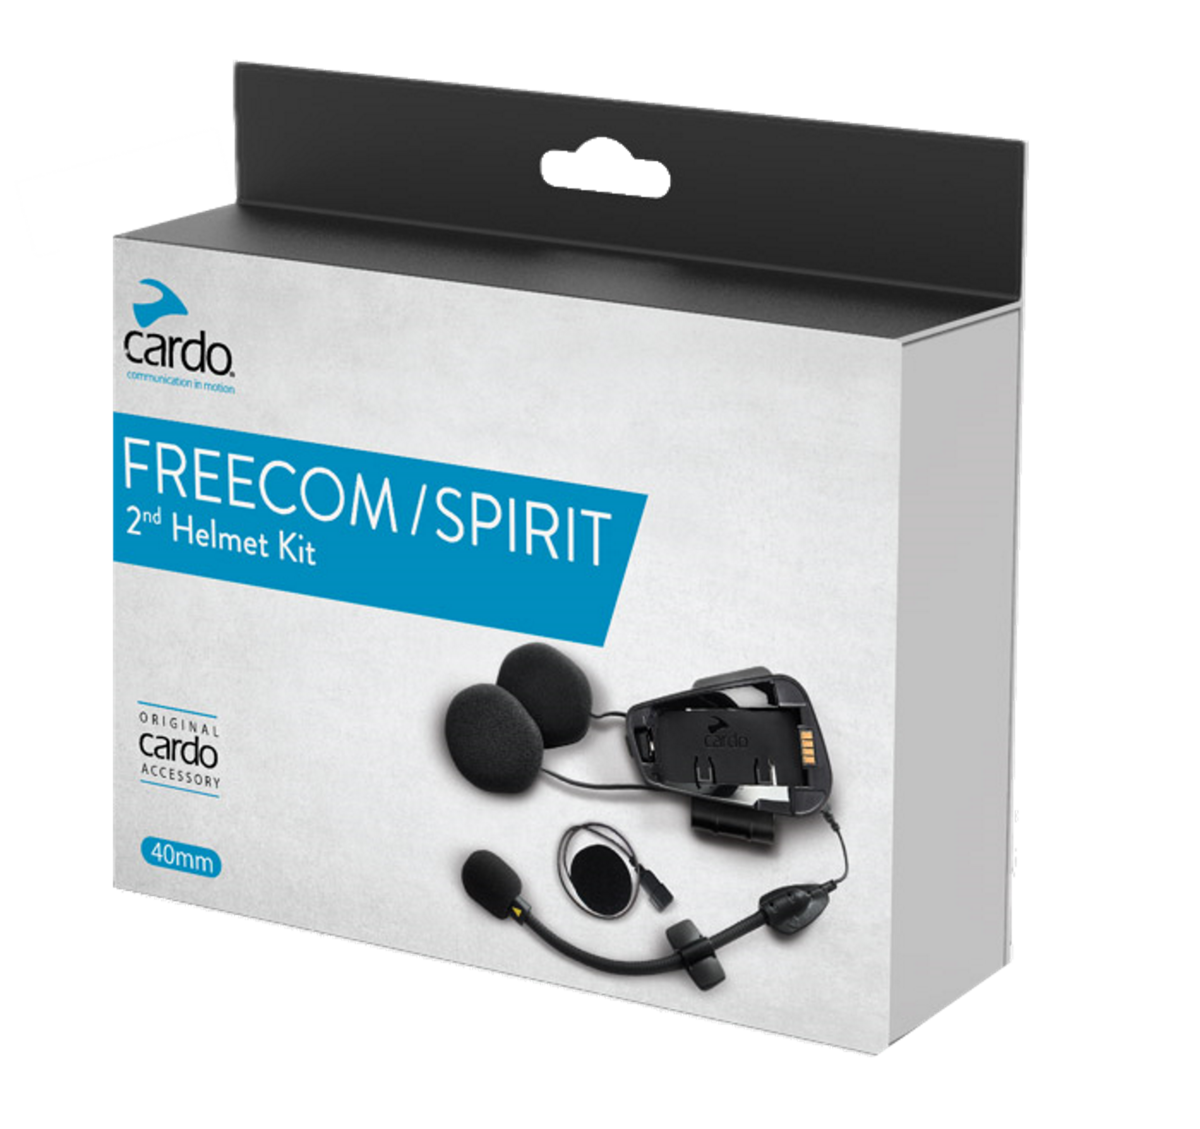 Cardo Freecom/Spirit 2nd Helmet Kit (ACC00008)